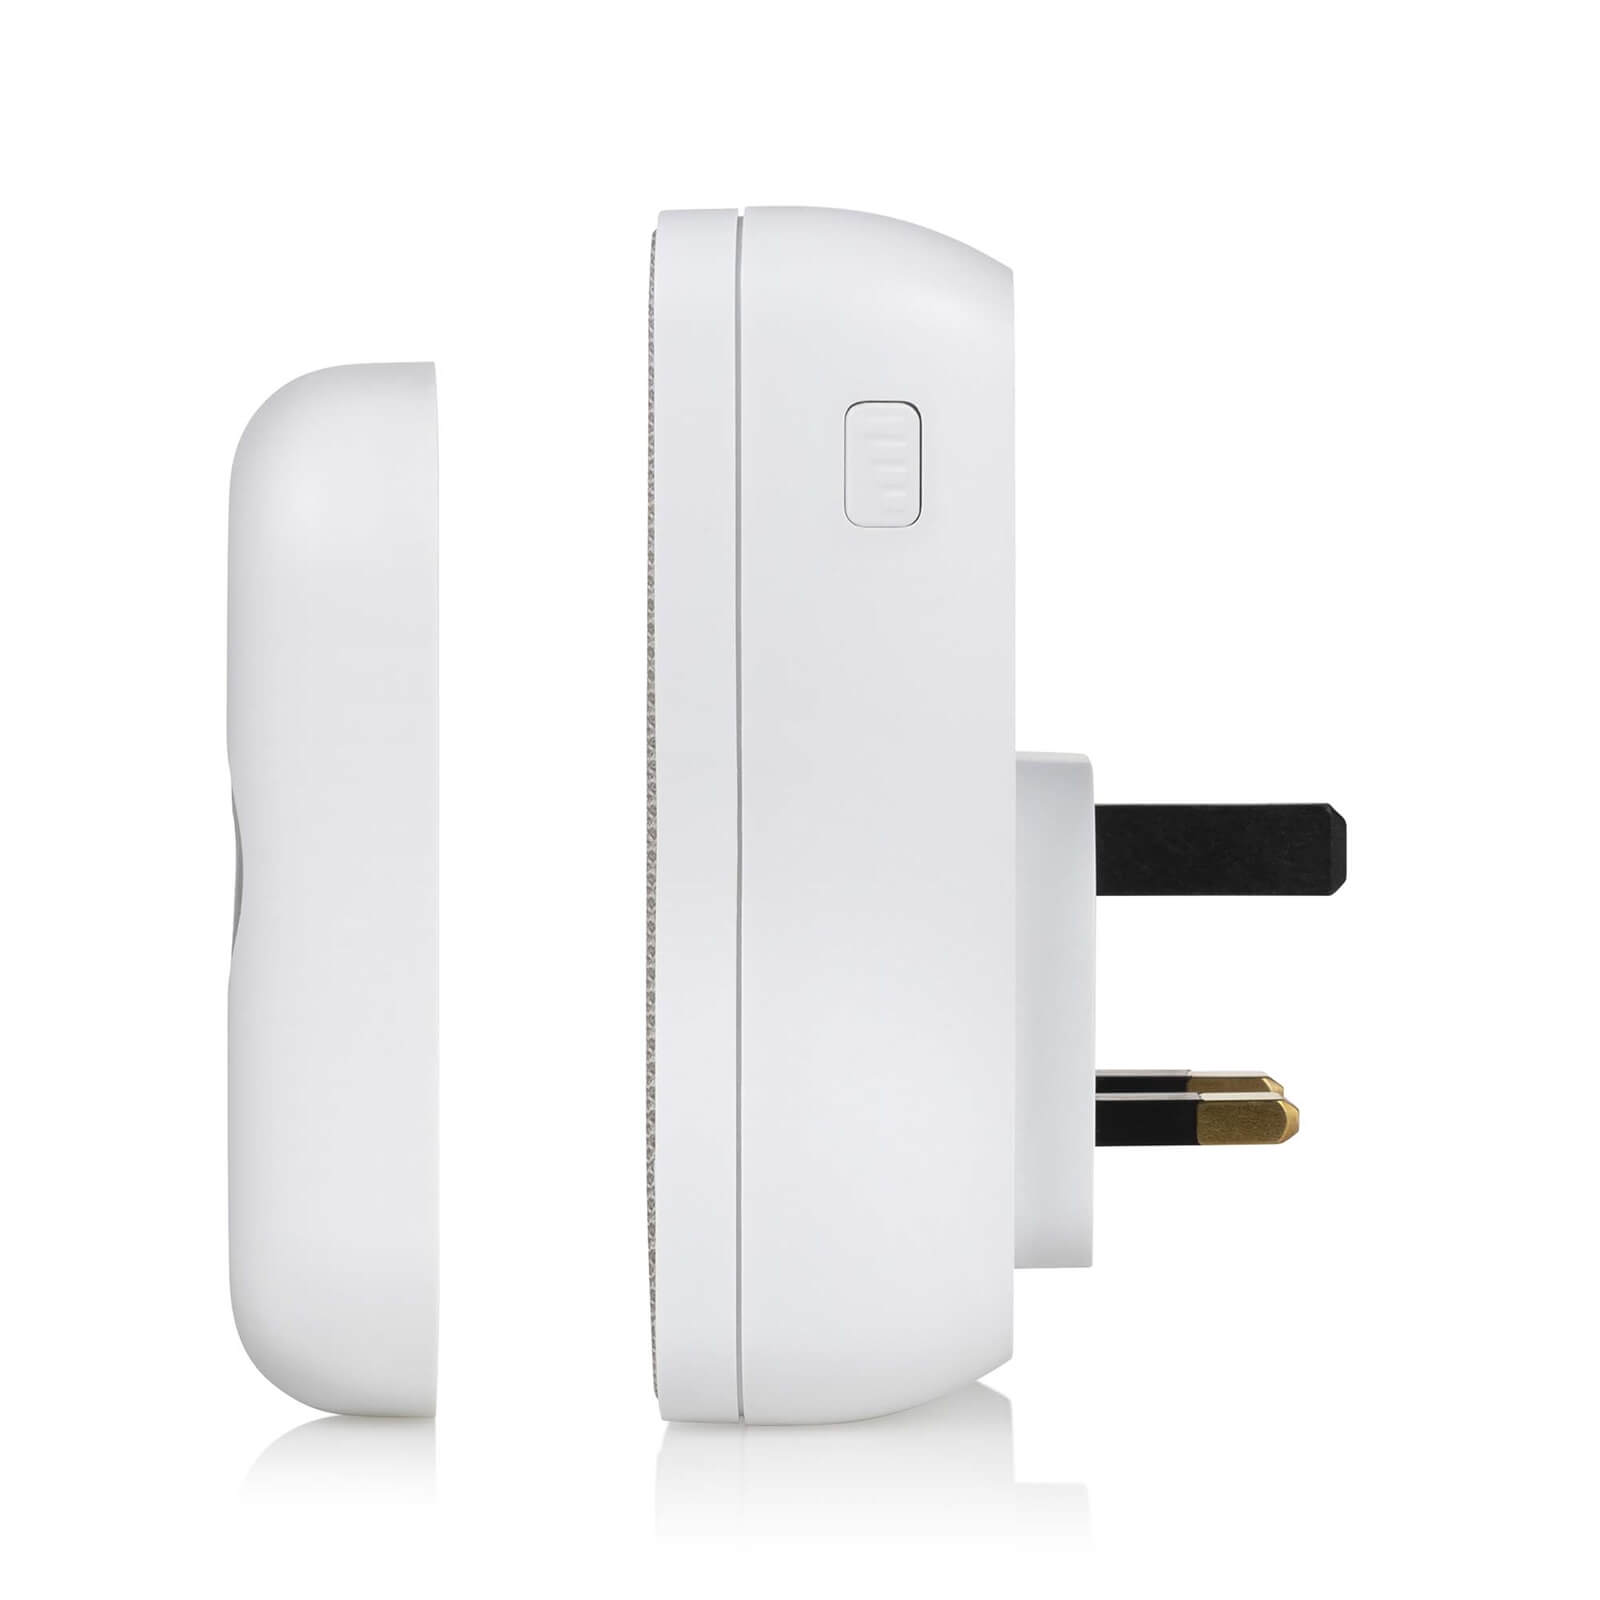 Byron 22322UK 150m Plug-in Wireless Doorbell set